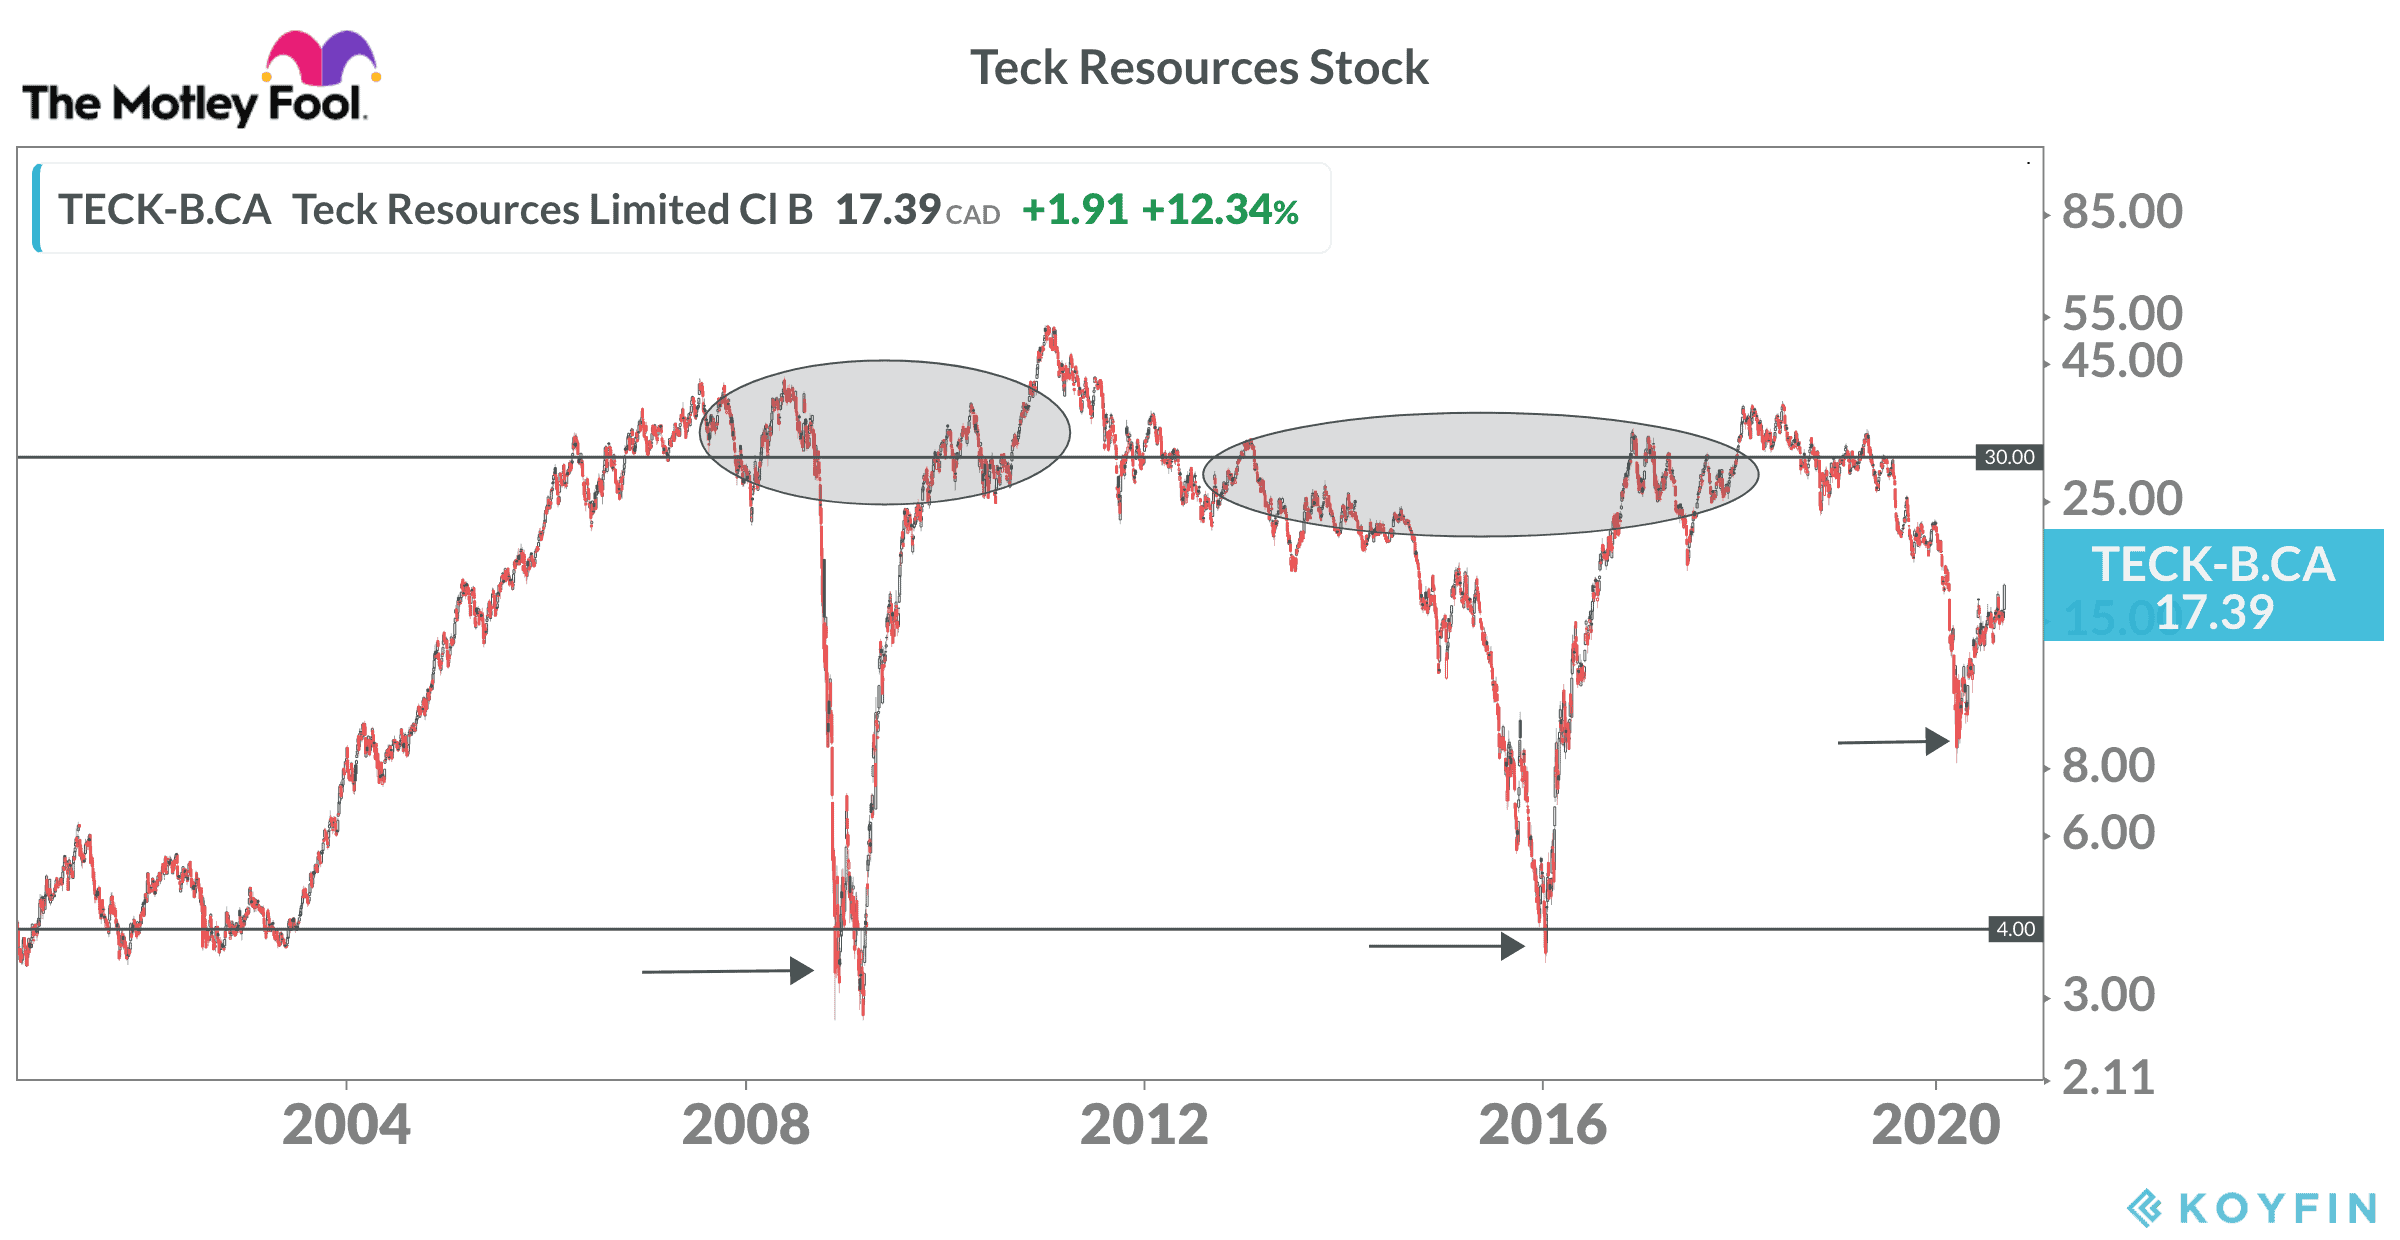 Teck Resources Stock Price